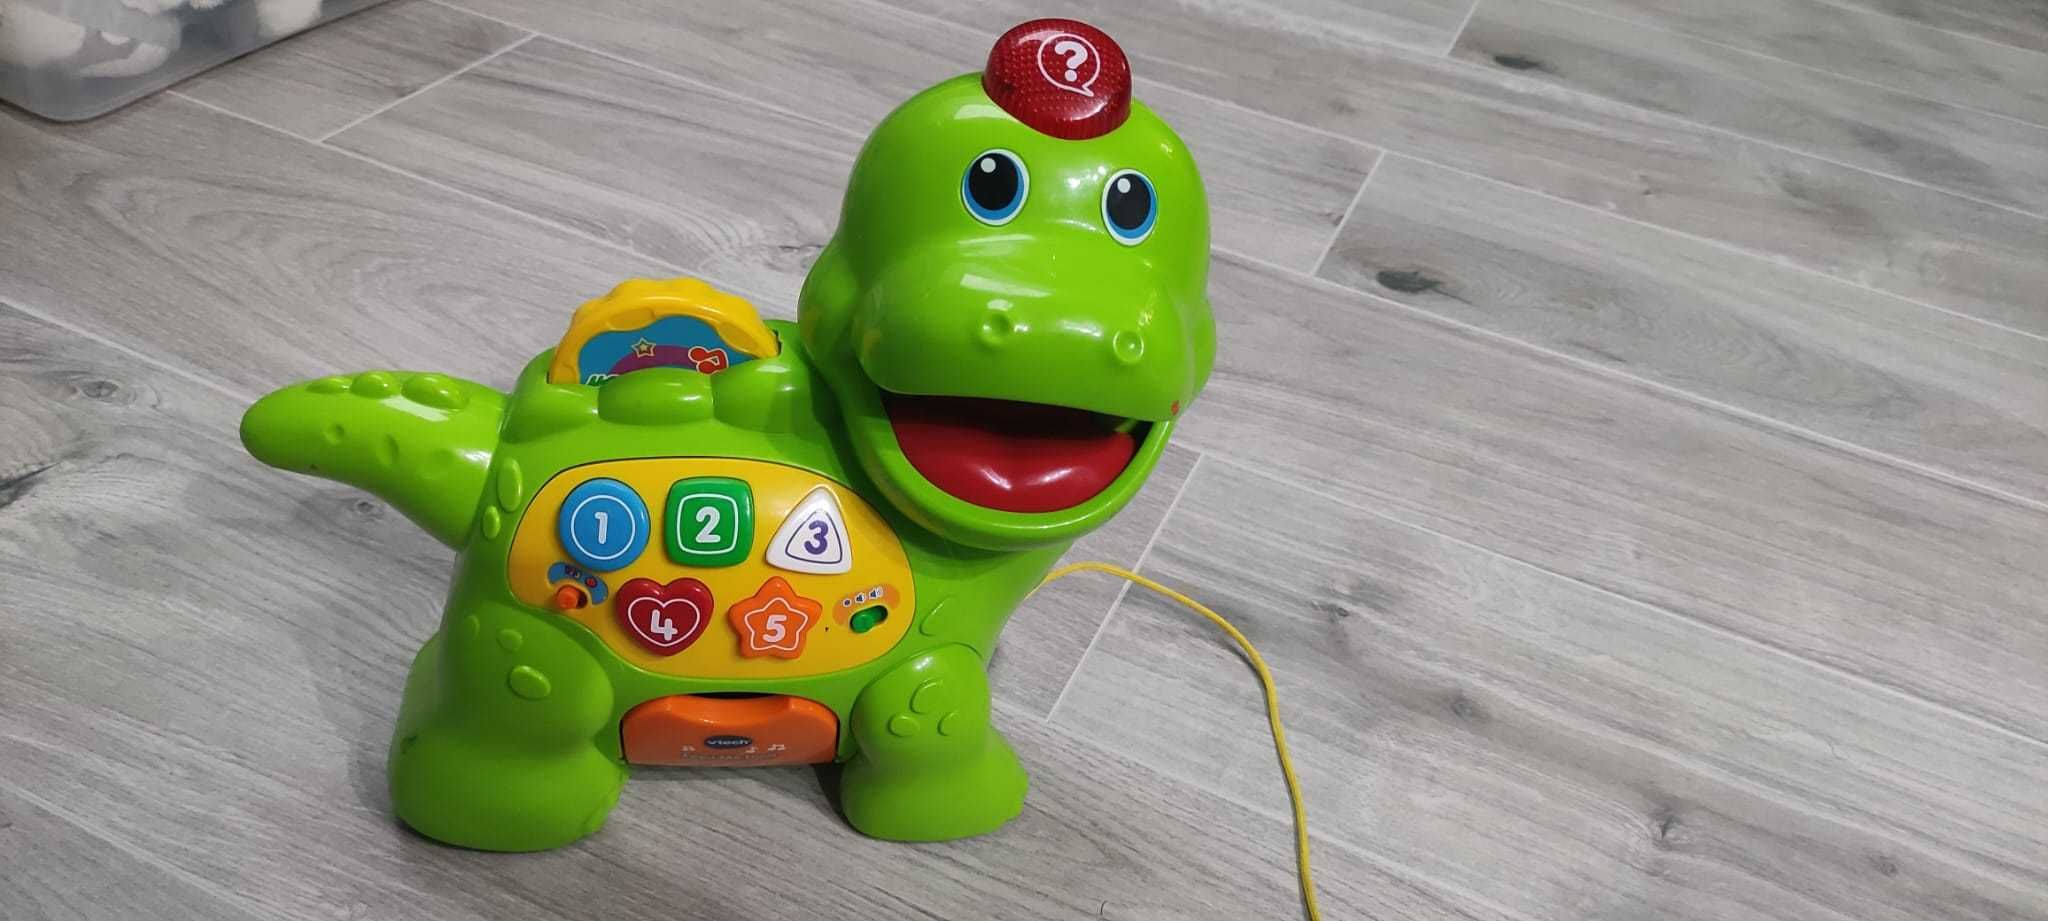 Dinozaur zabawka interaktywna V-tech